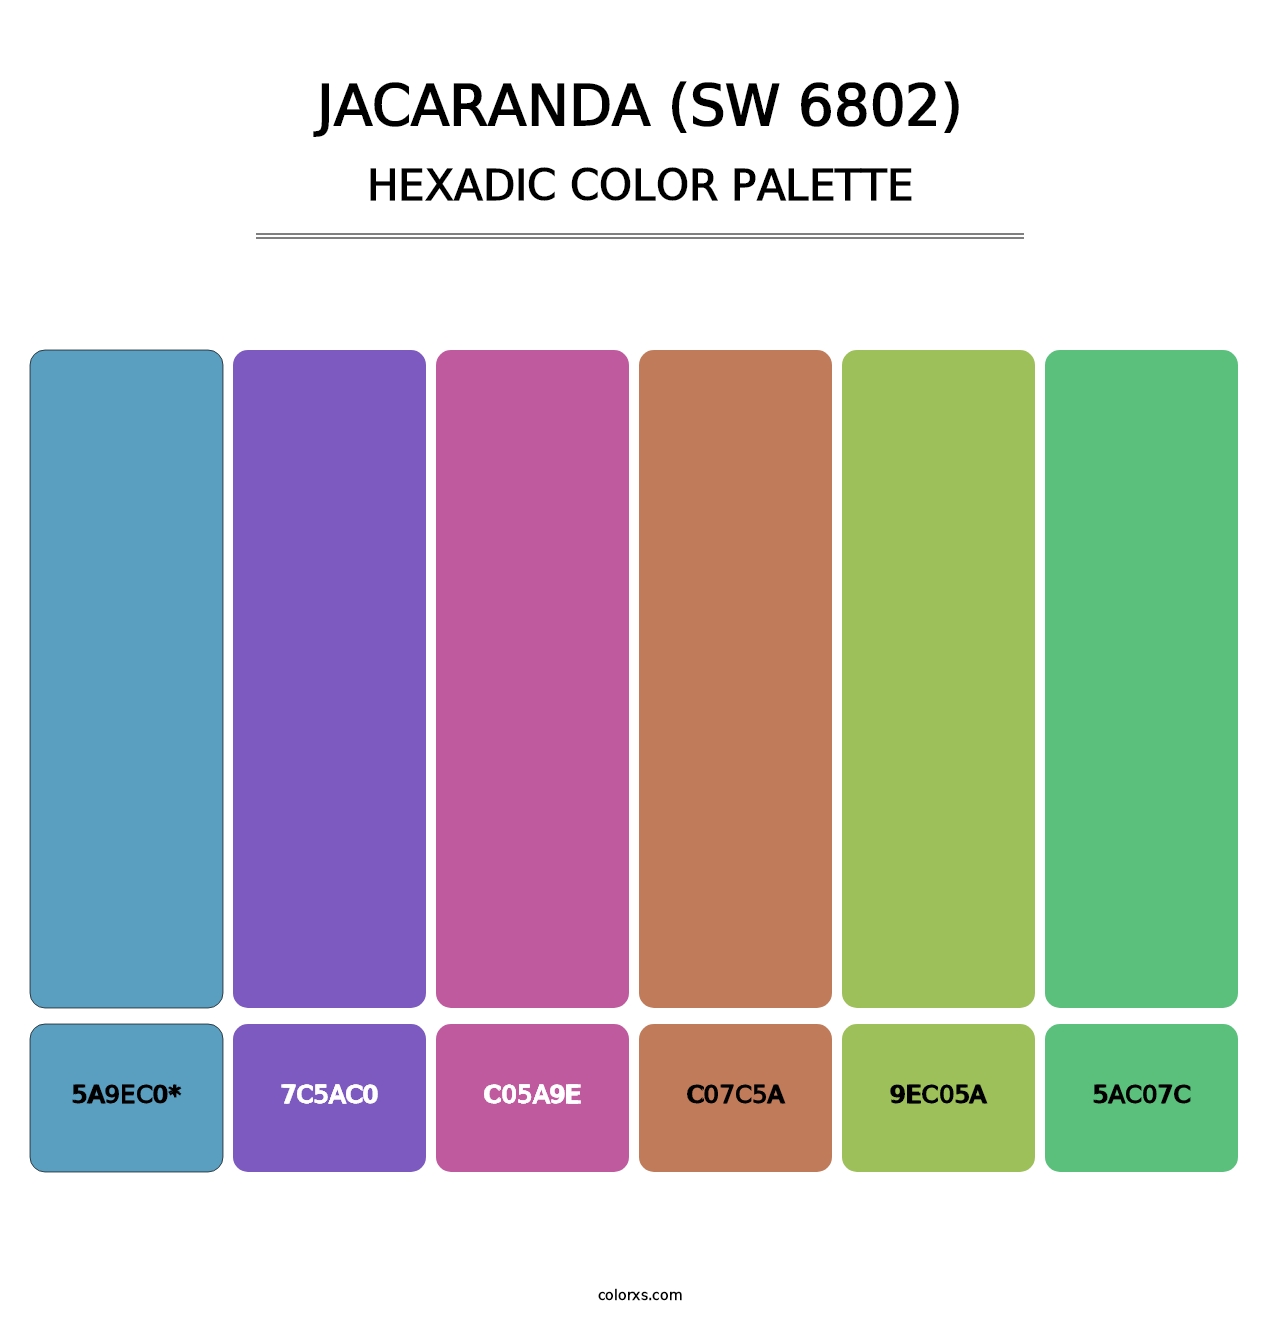 Jacaranda (SW 6802) - Hexadic Color Palette